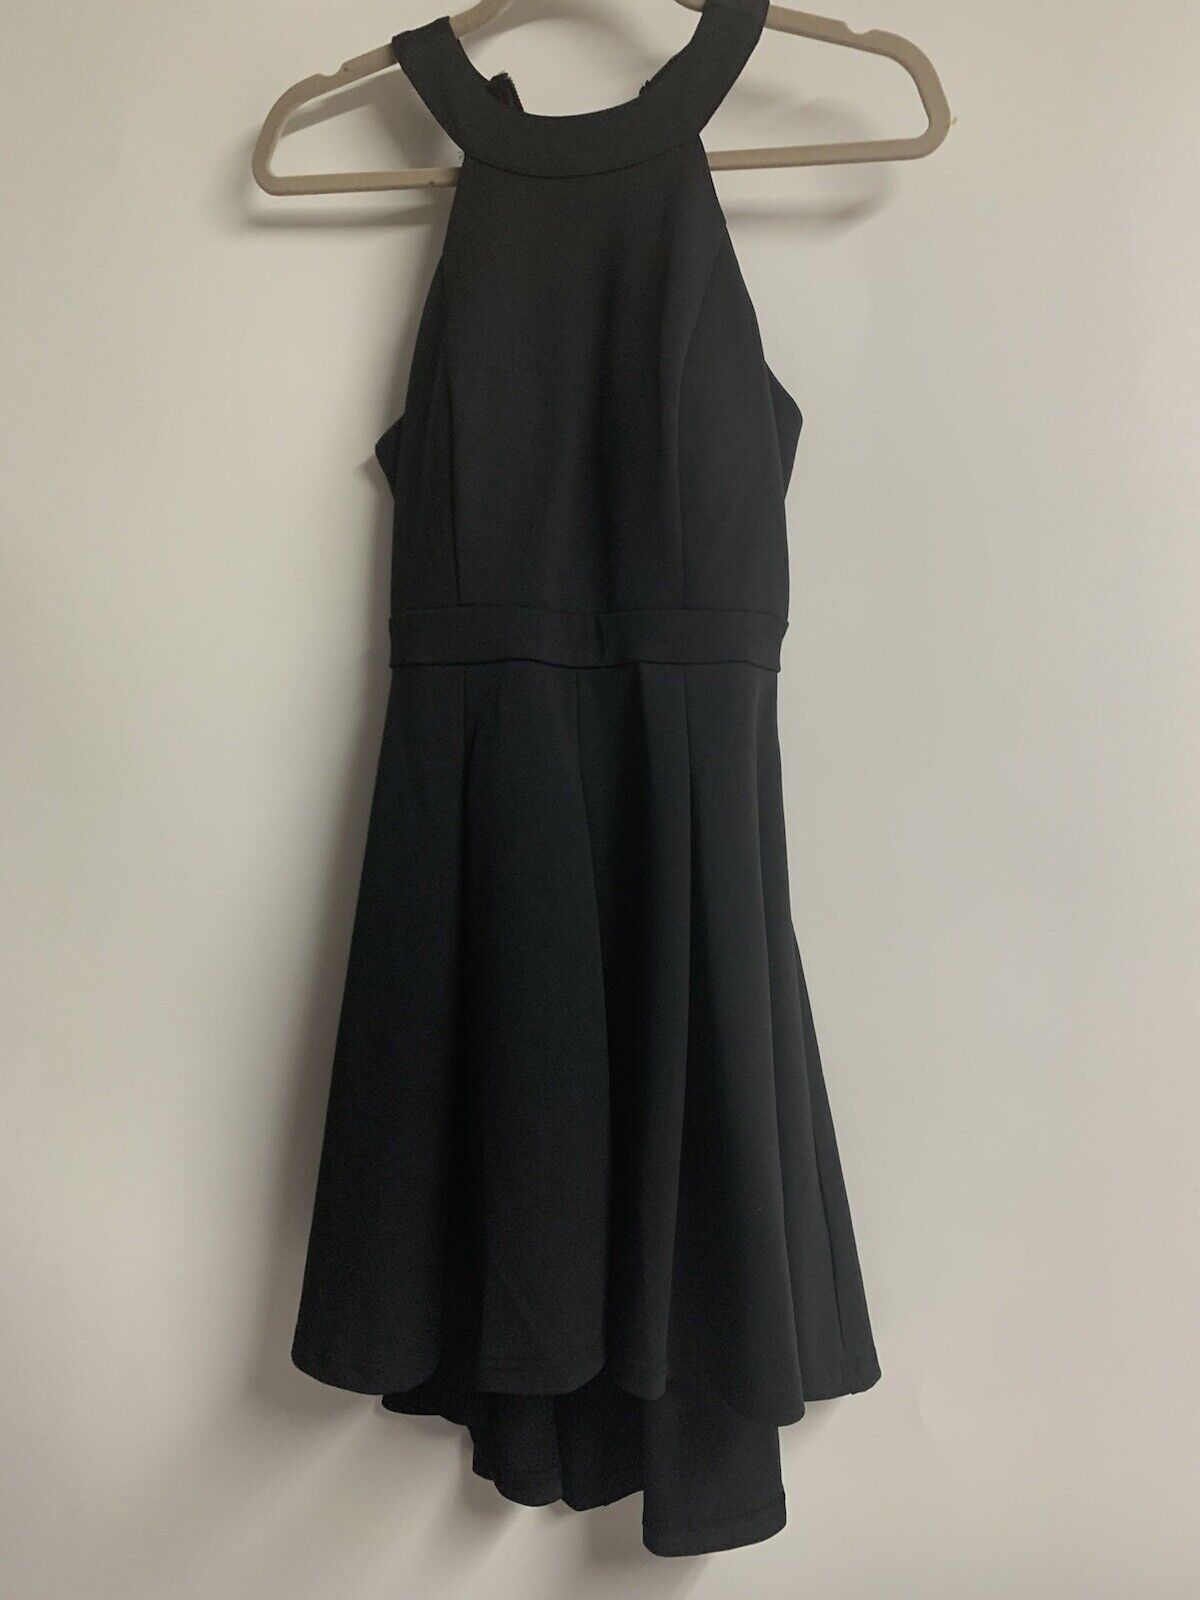 Windsor Black Cocktail Dress Open Back Size Small - image 2